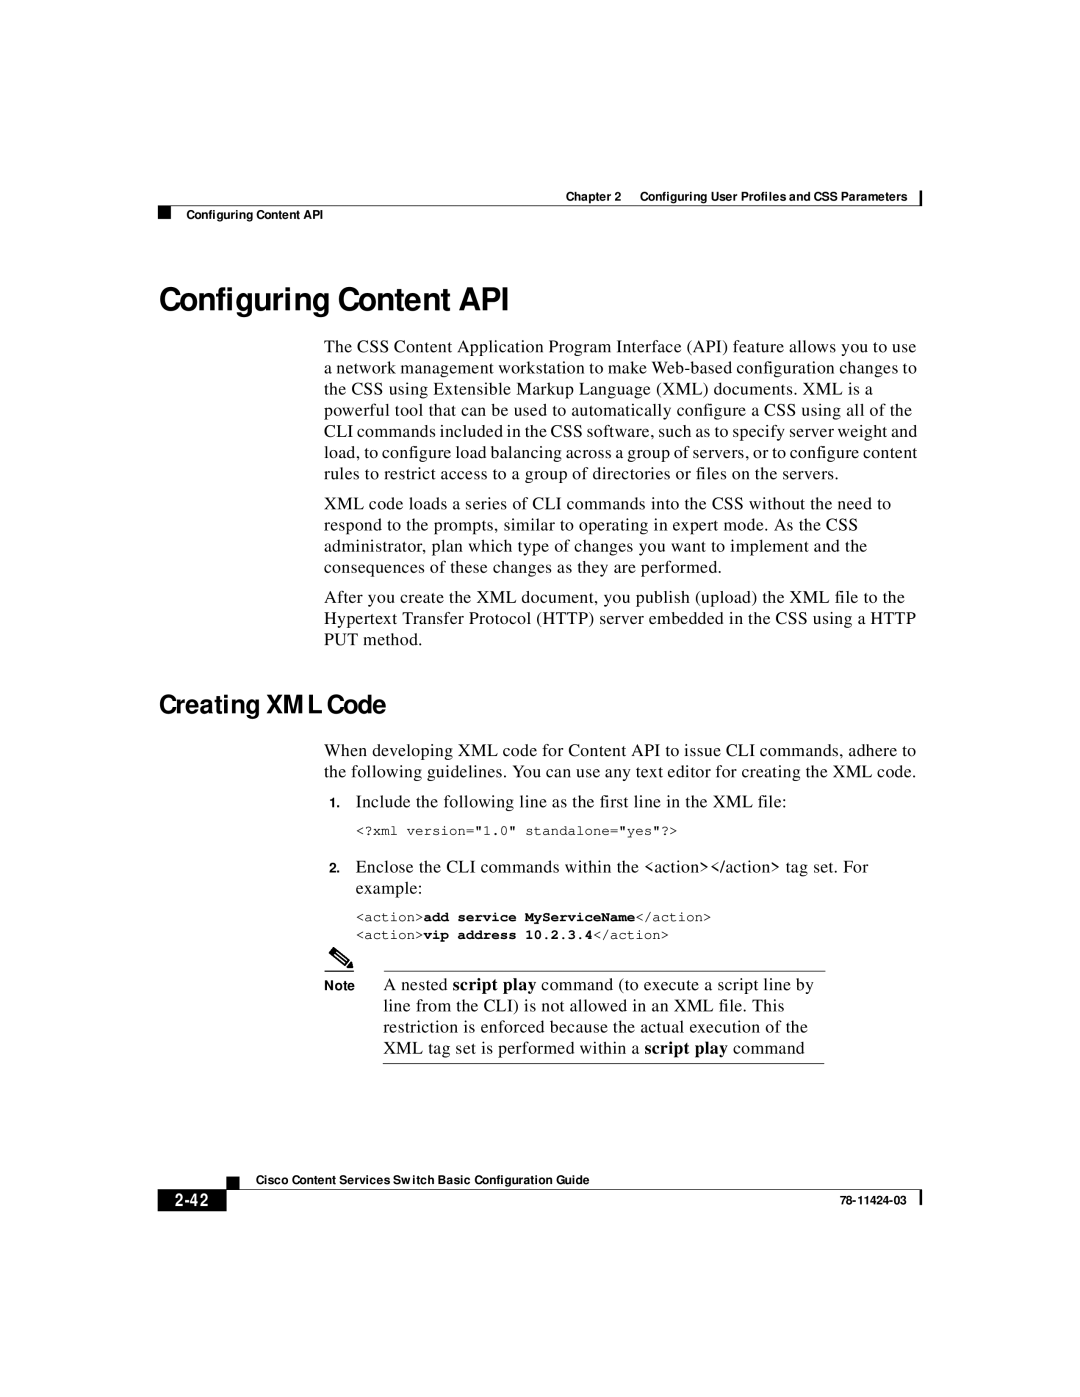 Cisco Systems 78-11424-03 manual Configuring Content API, Creating XML Code, 2-42 